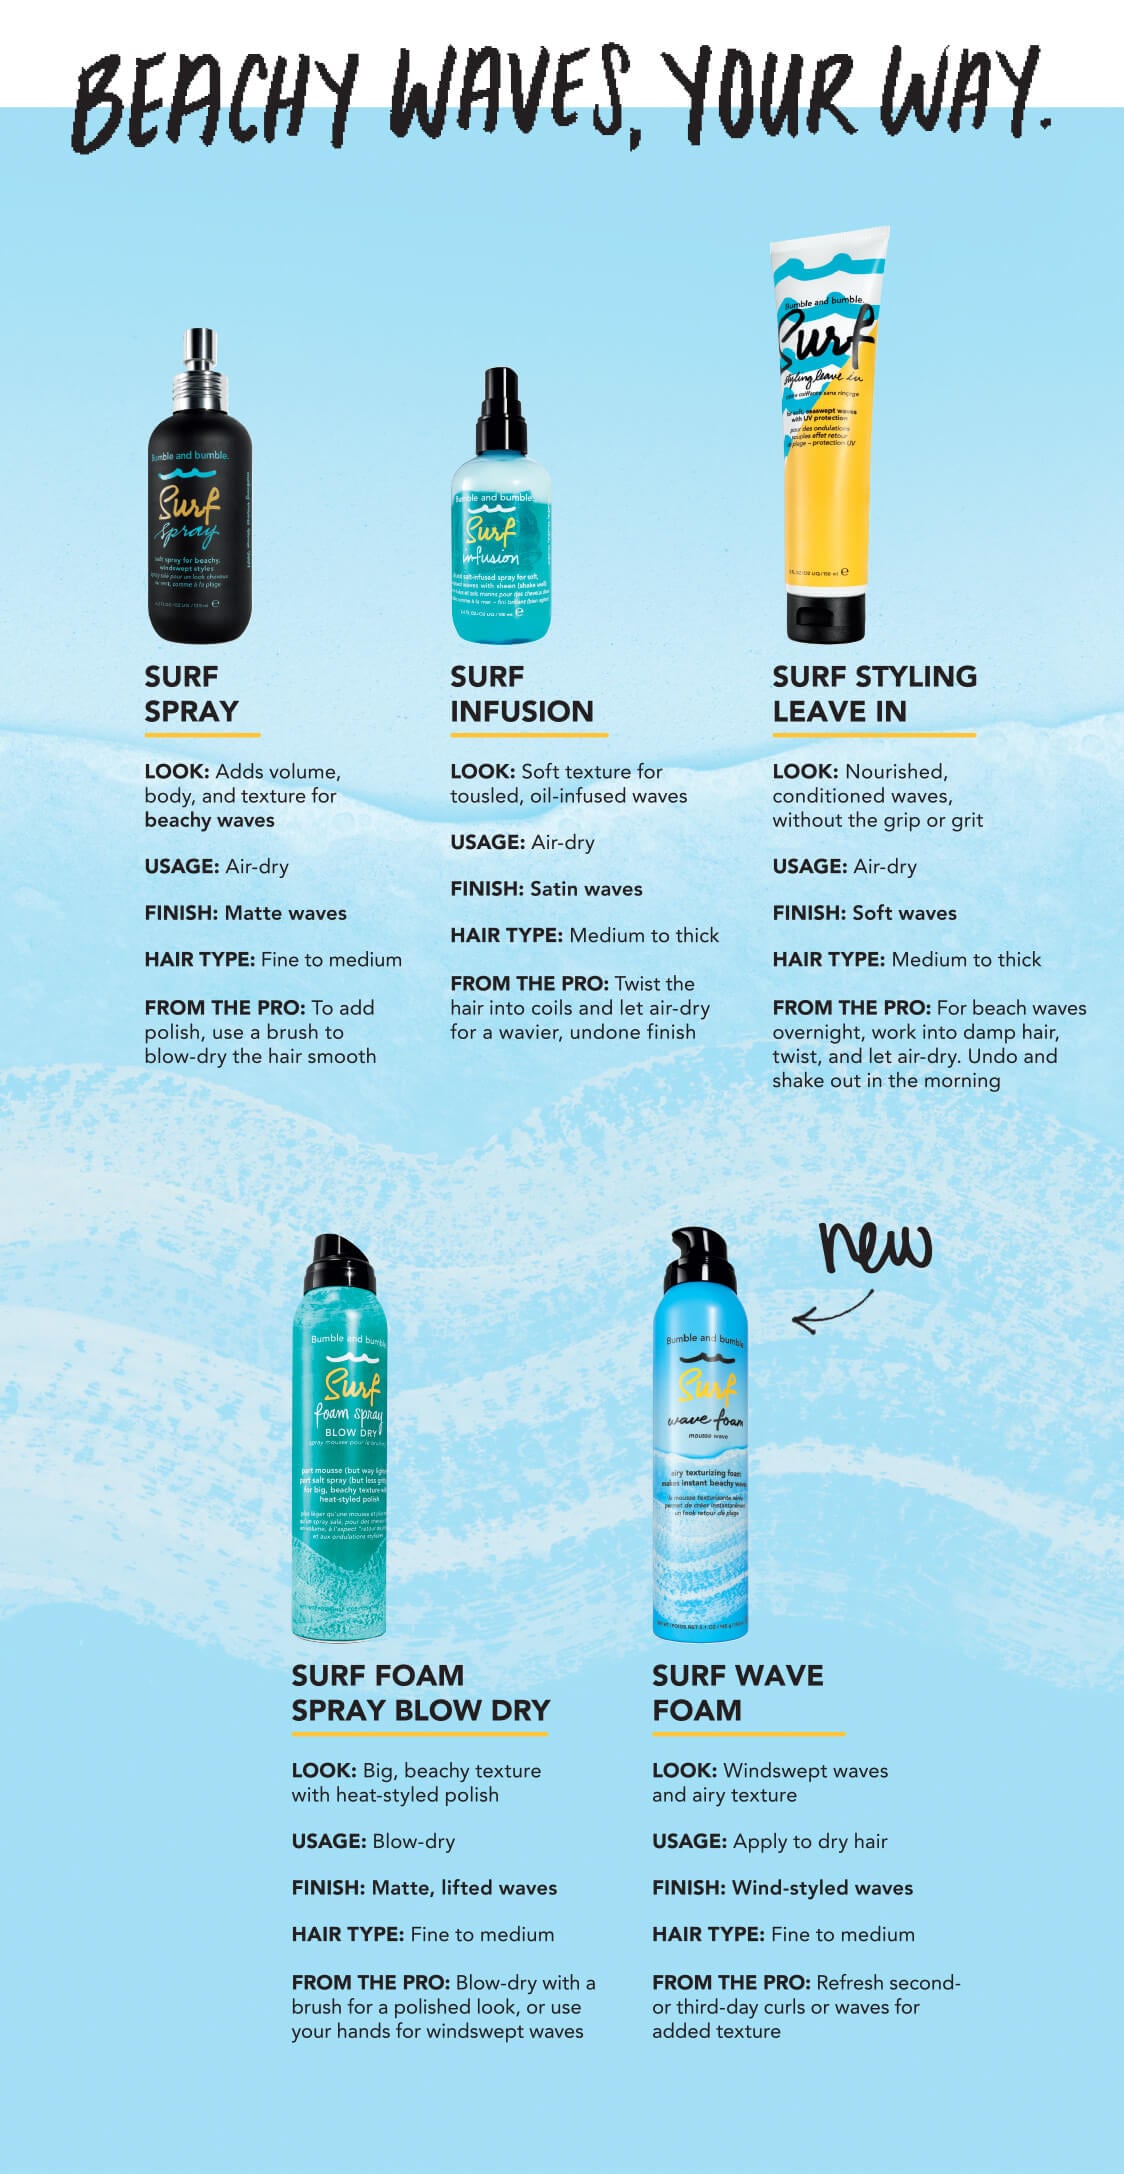 Surf spray « look marin » (spray salé pour les cheveux)… – Bulles